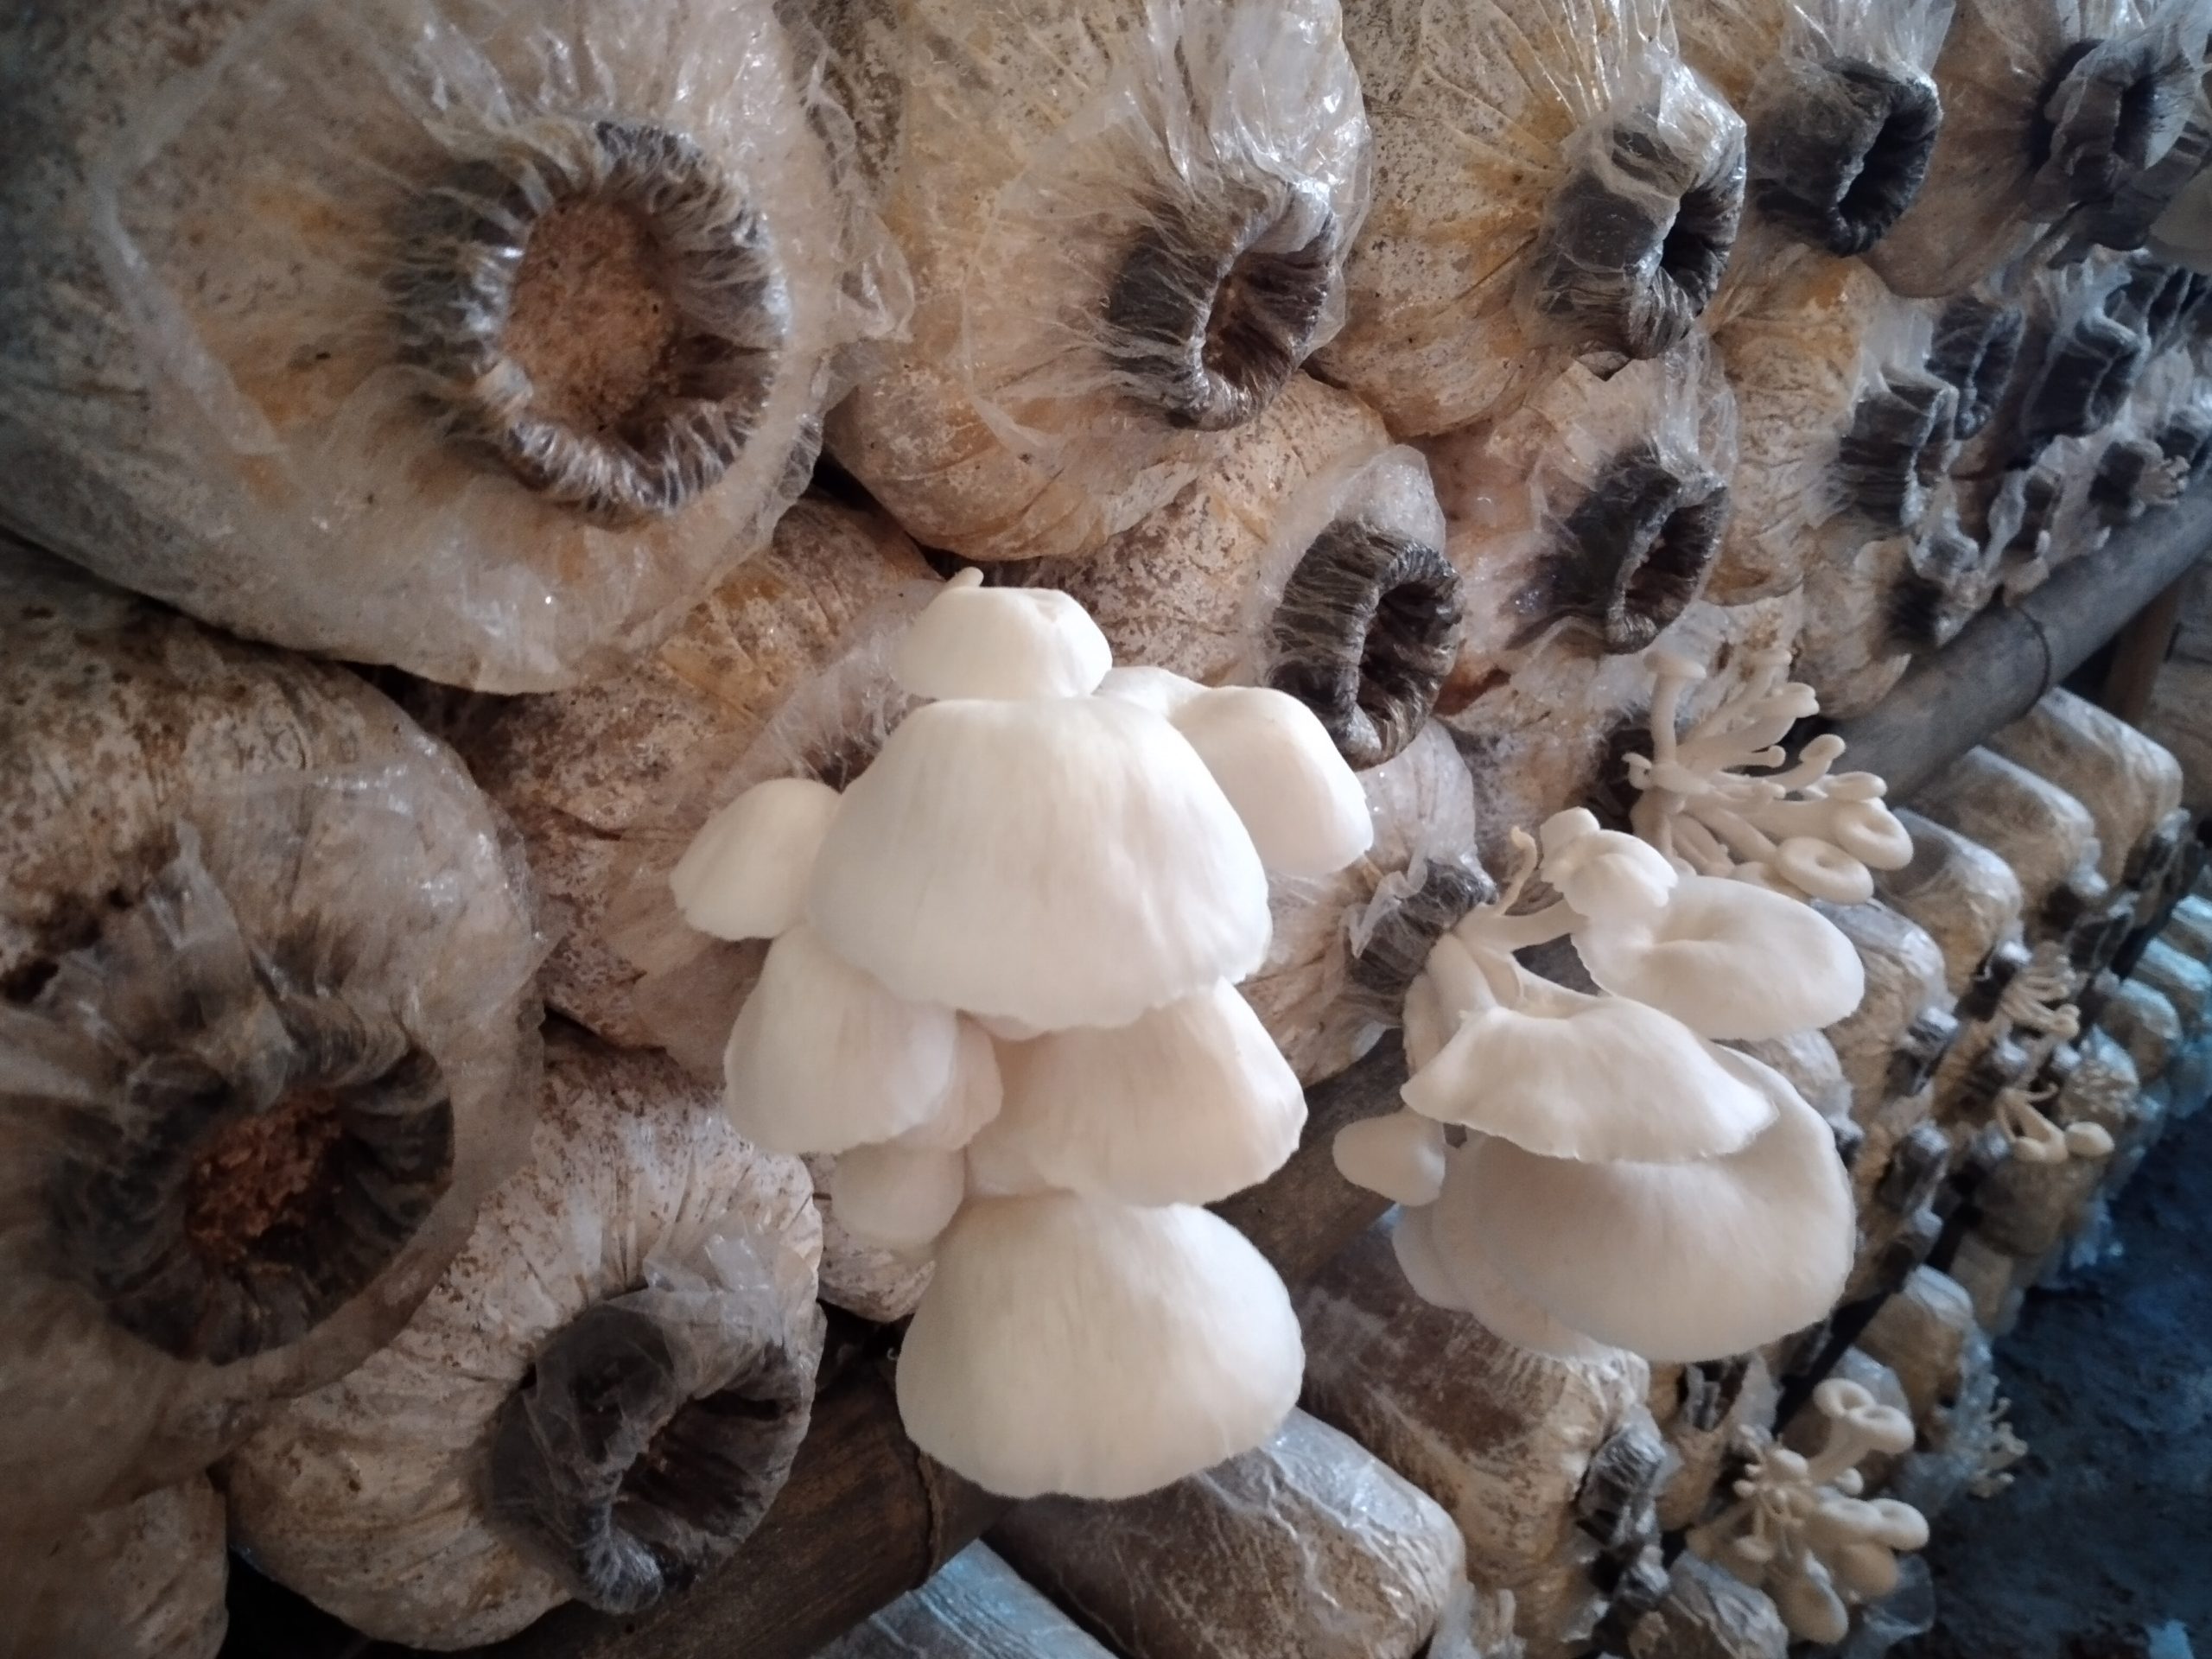 Ruang budidaya jamur tiram. Foto: Moh Tamimi/ Mongabay Indonesia